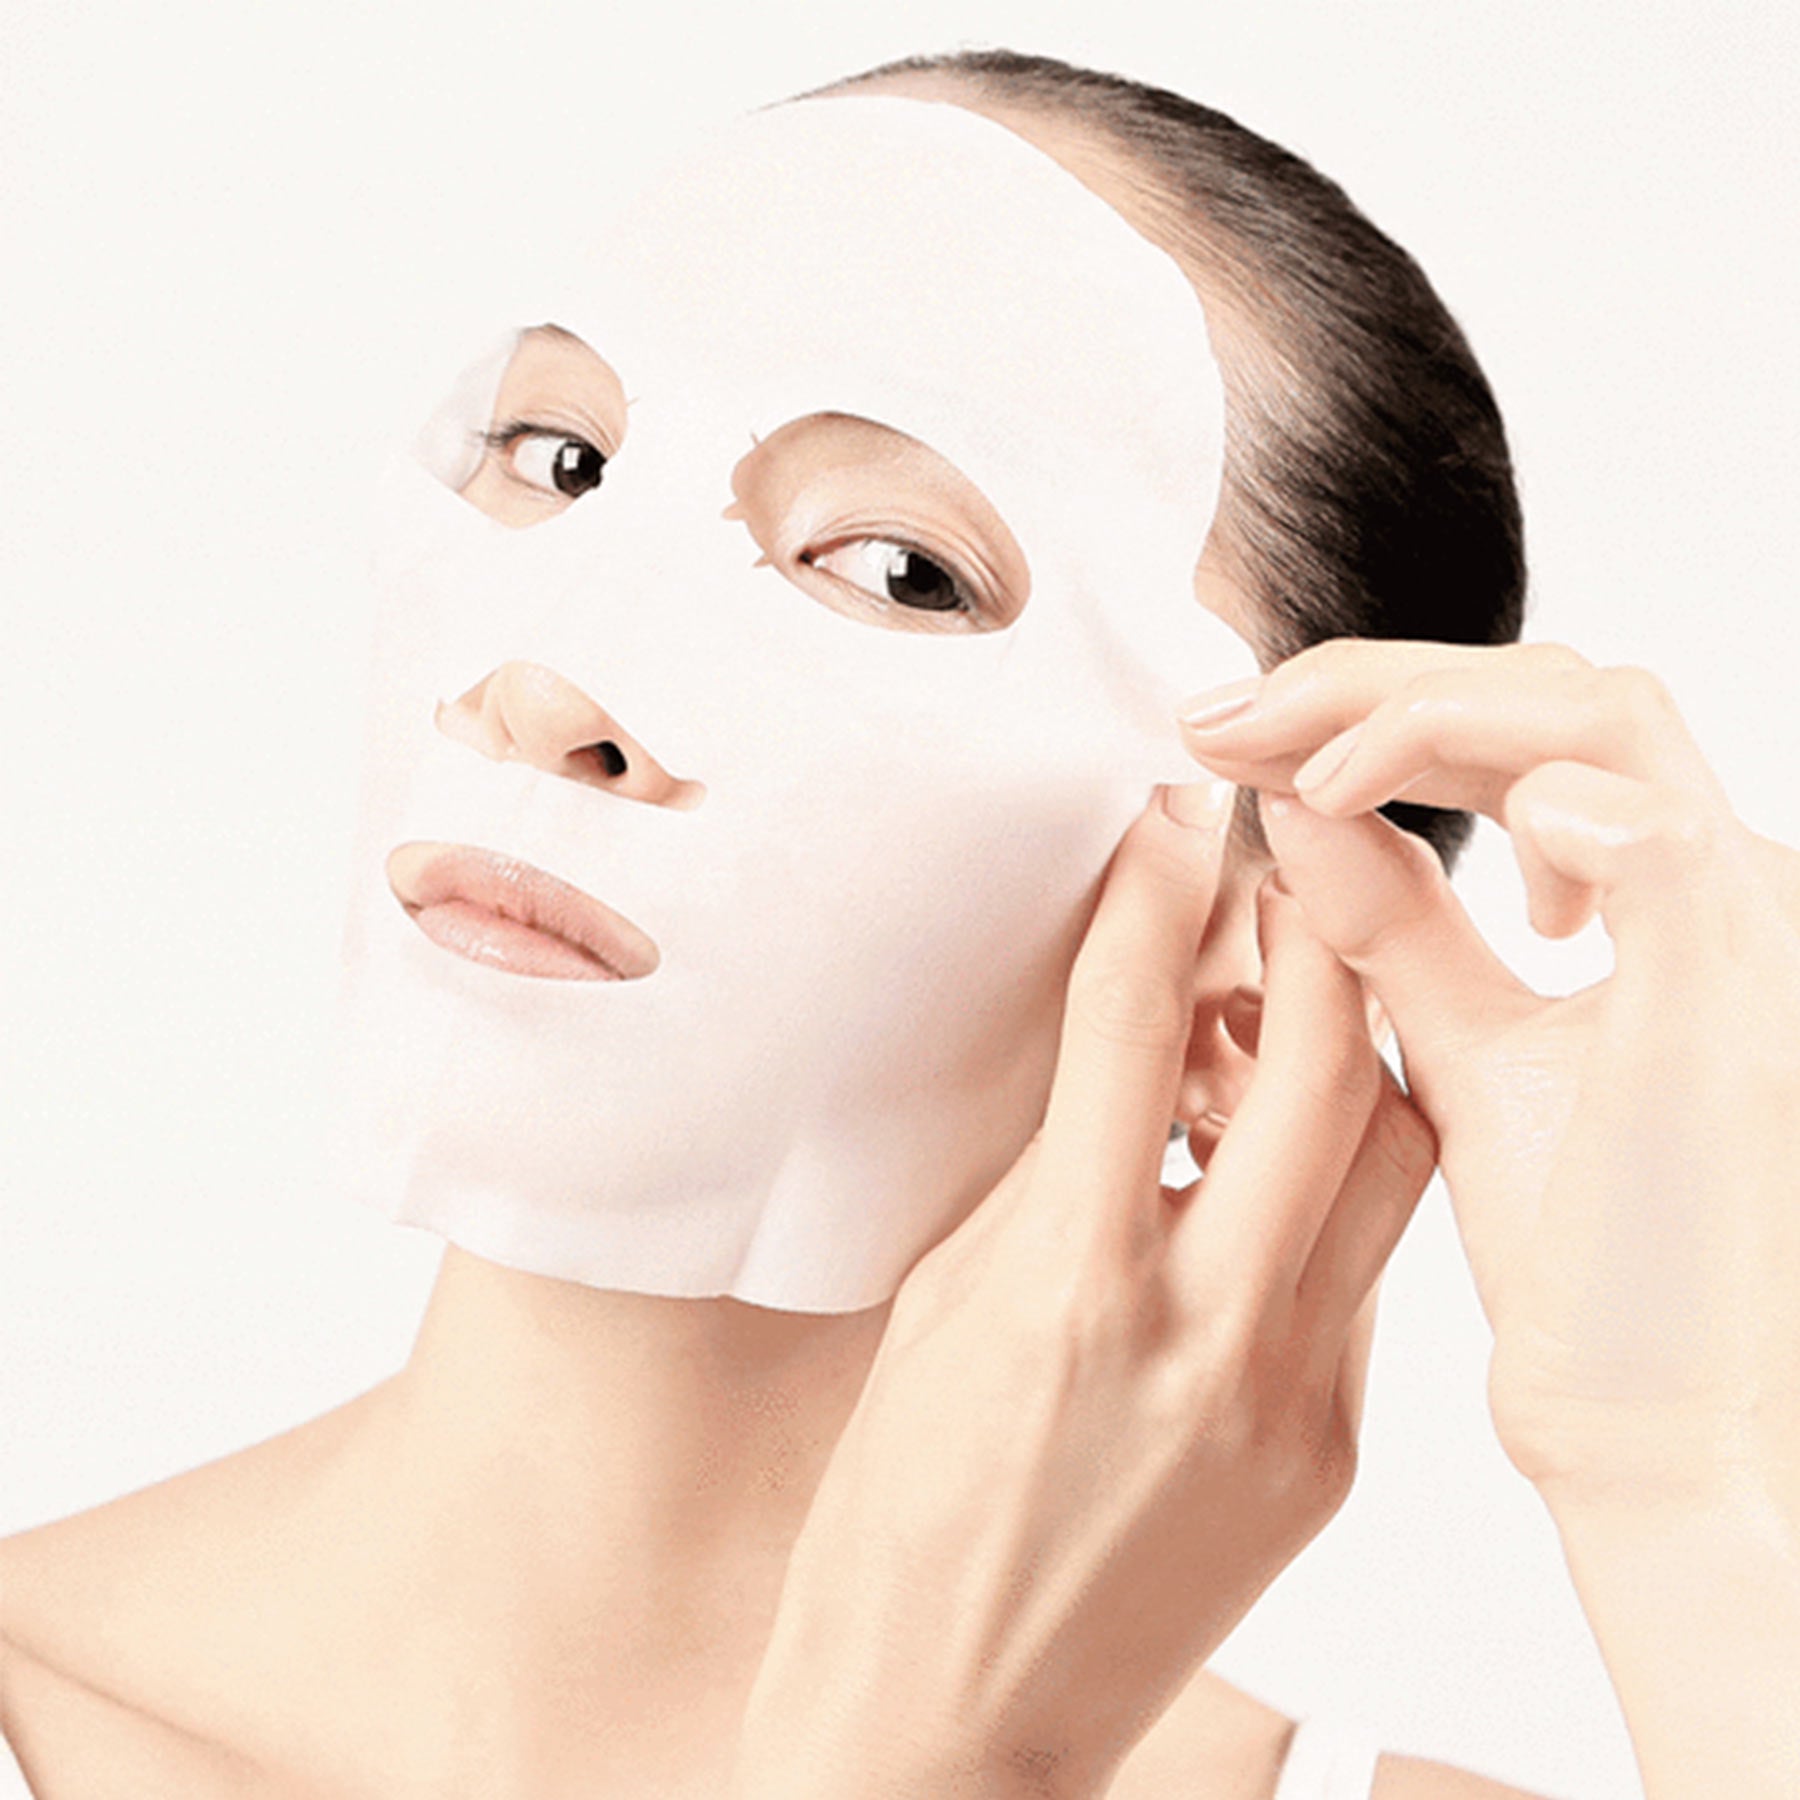 Shiseido White Lucent Power Brightening Mask